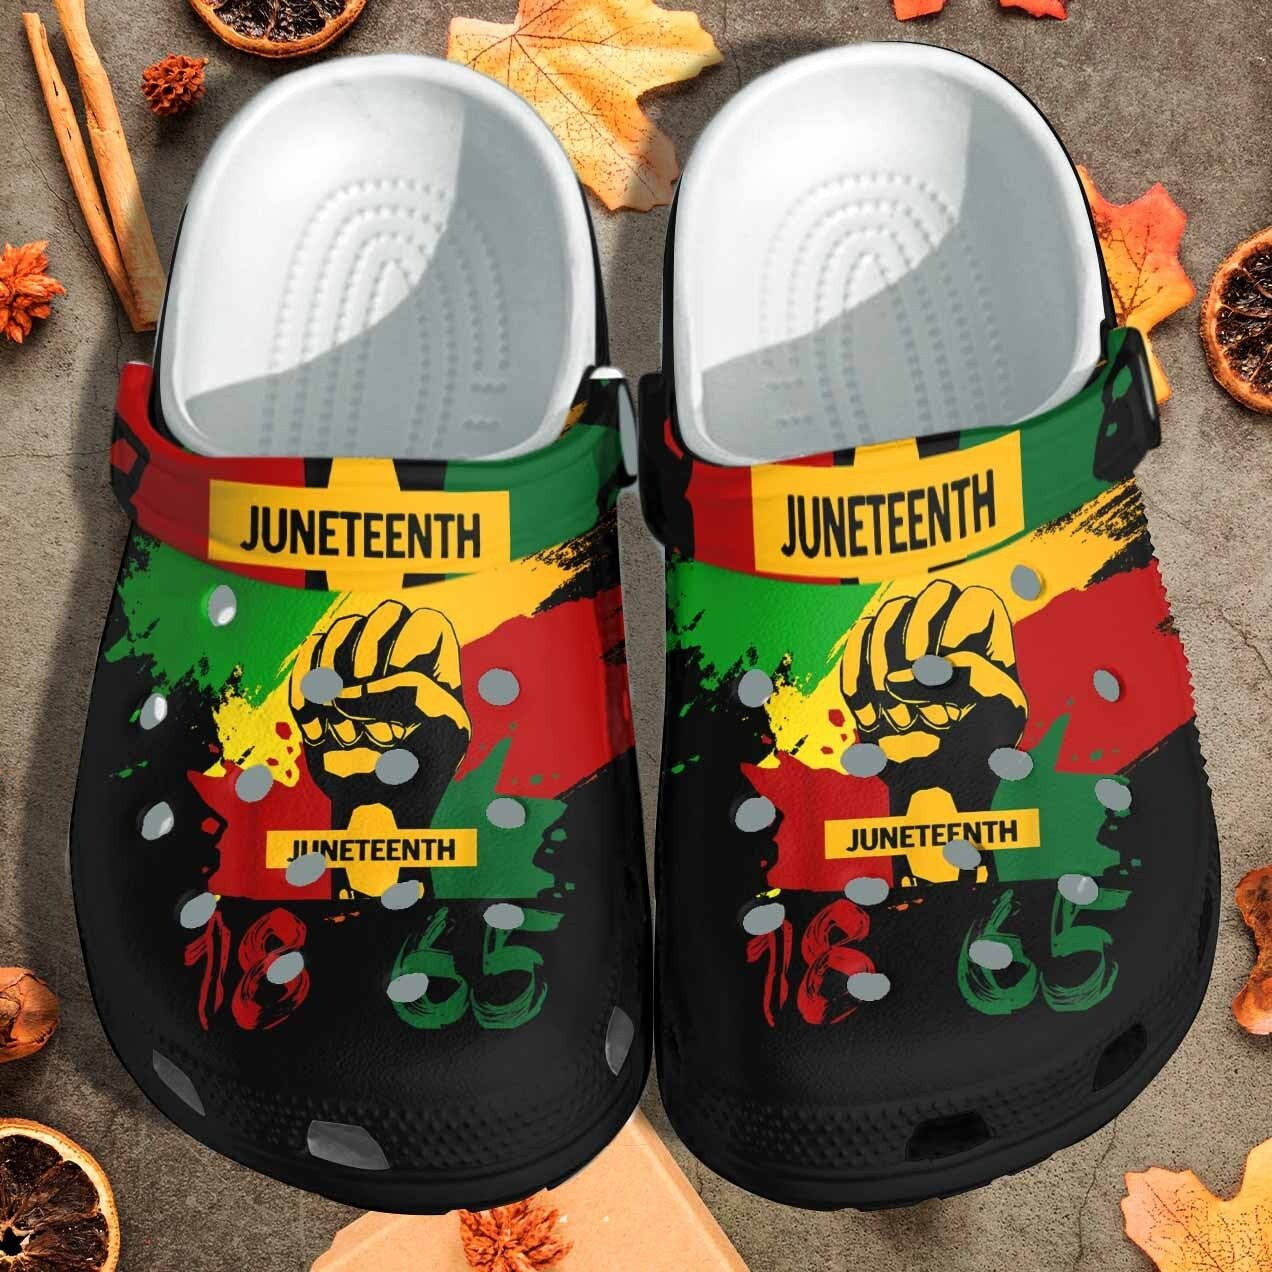 Juneteenth Right Hand Africa Crocs Shoes – 1865 Junteenth Black Girl Shoes Clogs Gift